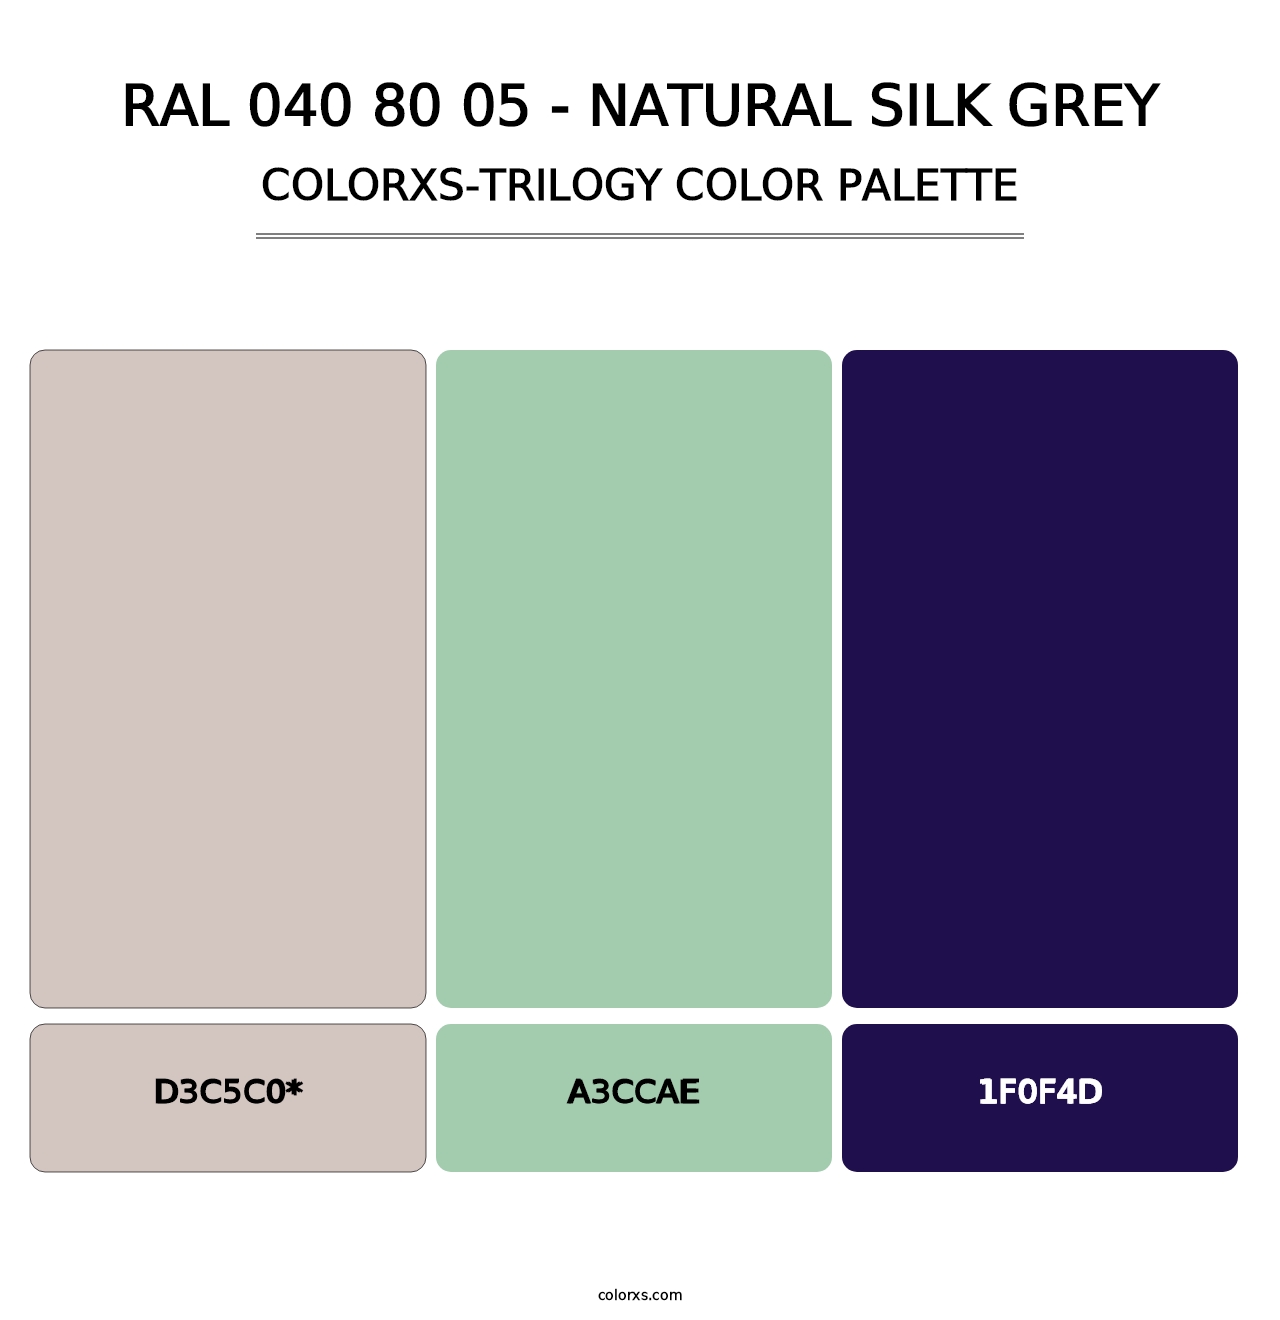 RAL 040 80 05 - Natural Silk Grey - Colorxs Trilogy Palette